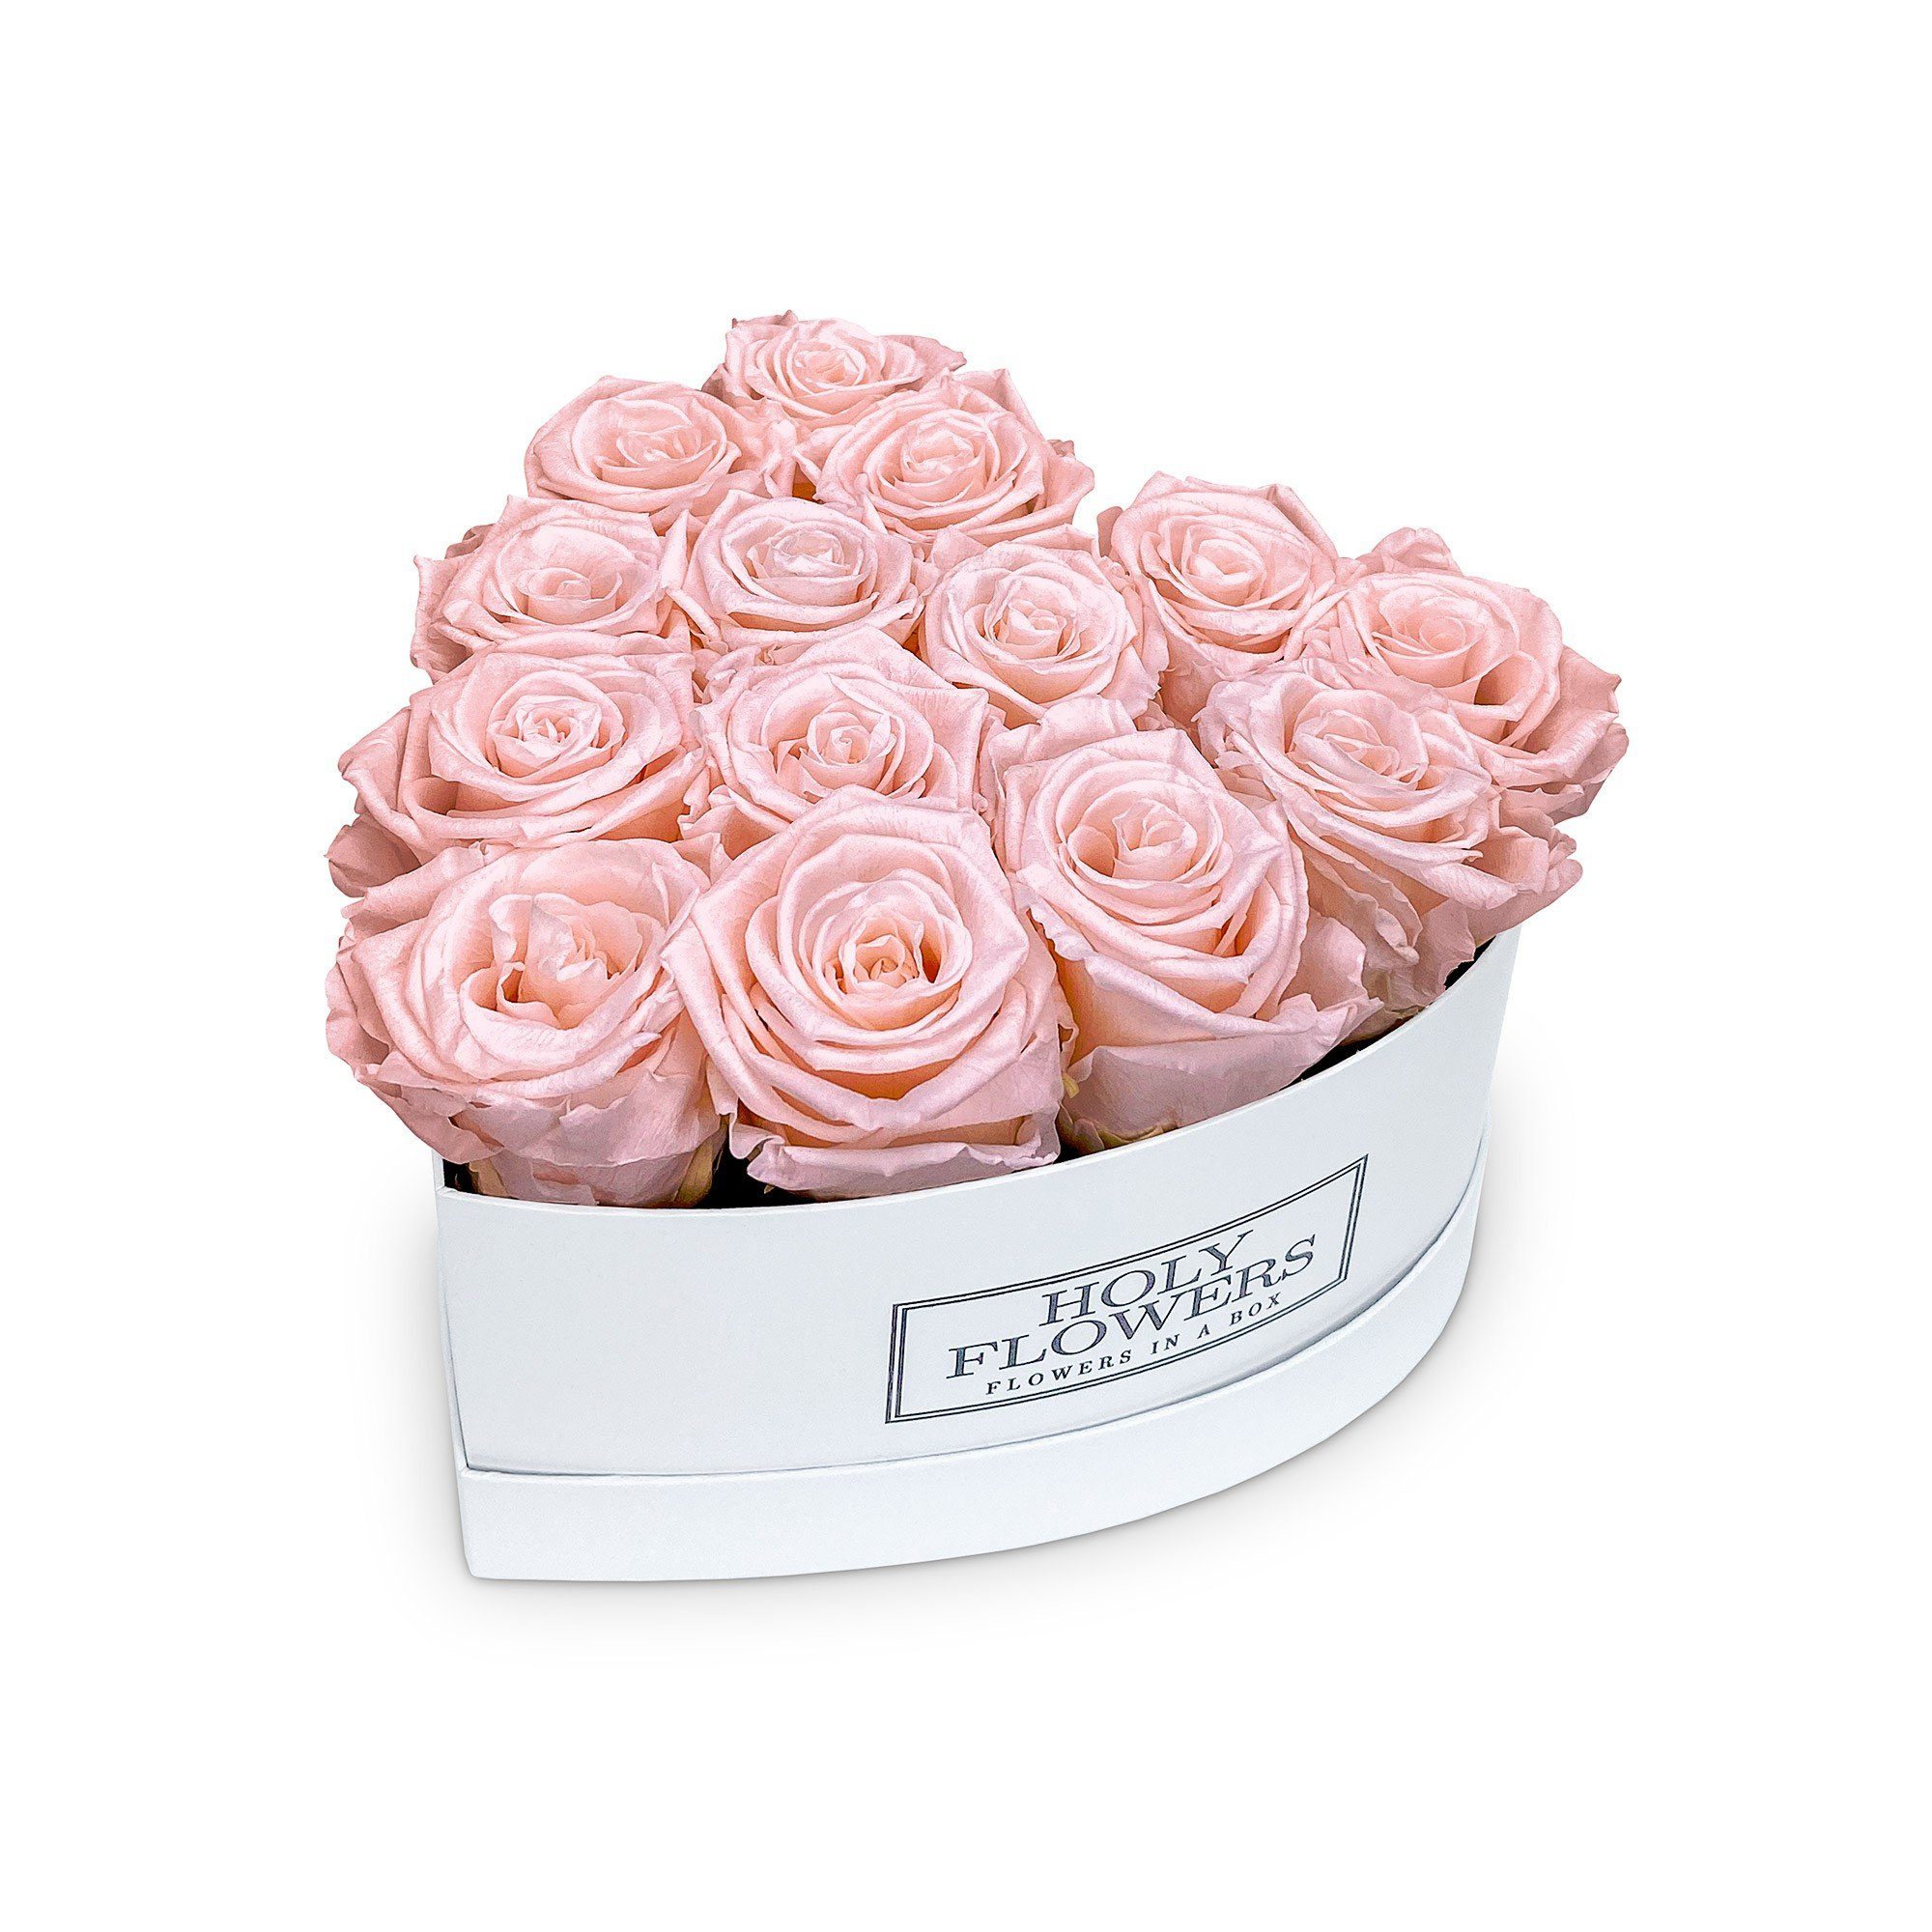 Kunstblume Rosenbox Großes Herz mit Infinity Rosen I 3 Jahre haltbar I Echte, duftende konservierte Blumen I by Raul Richter Infinity Rose, Holy Flowers, Höhe 10 cm Pink Blush